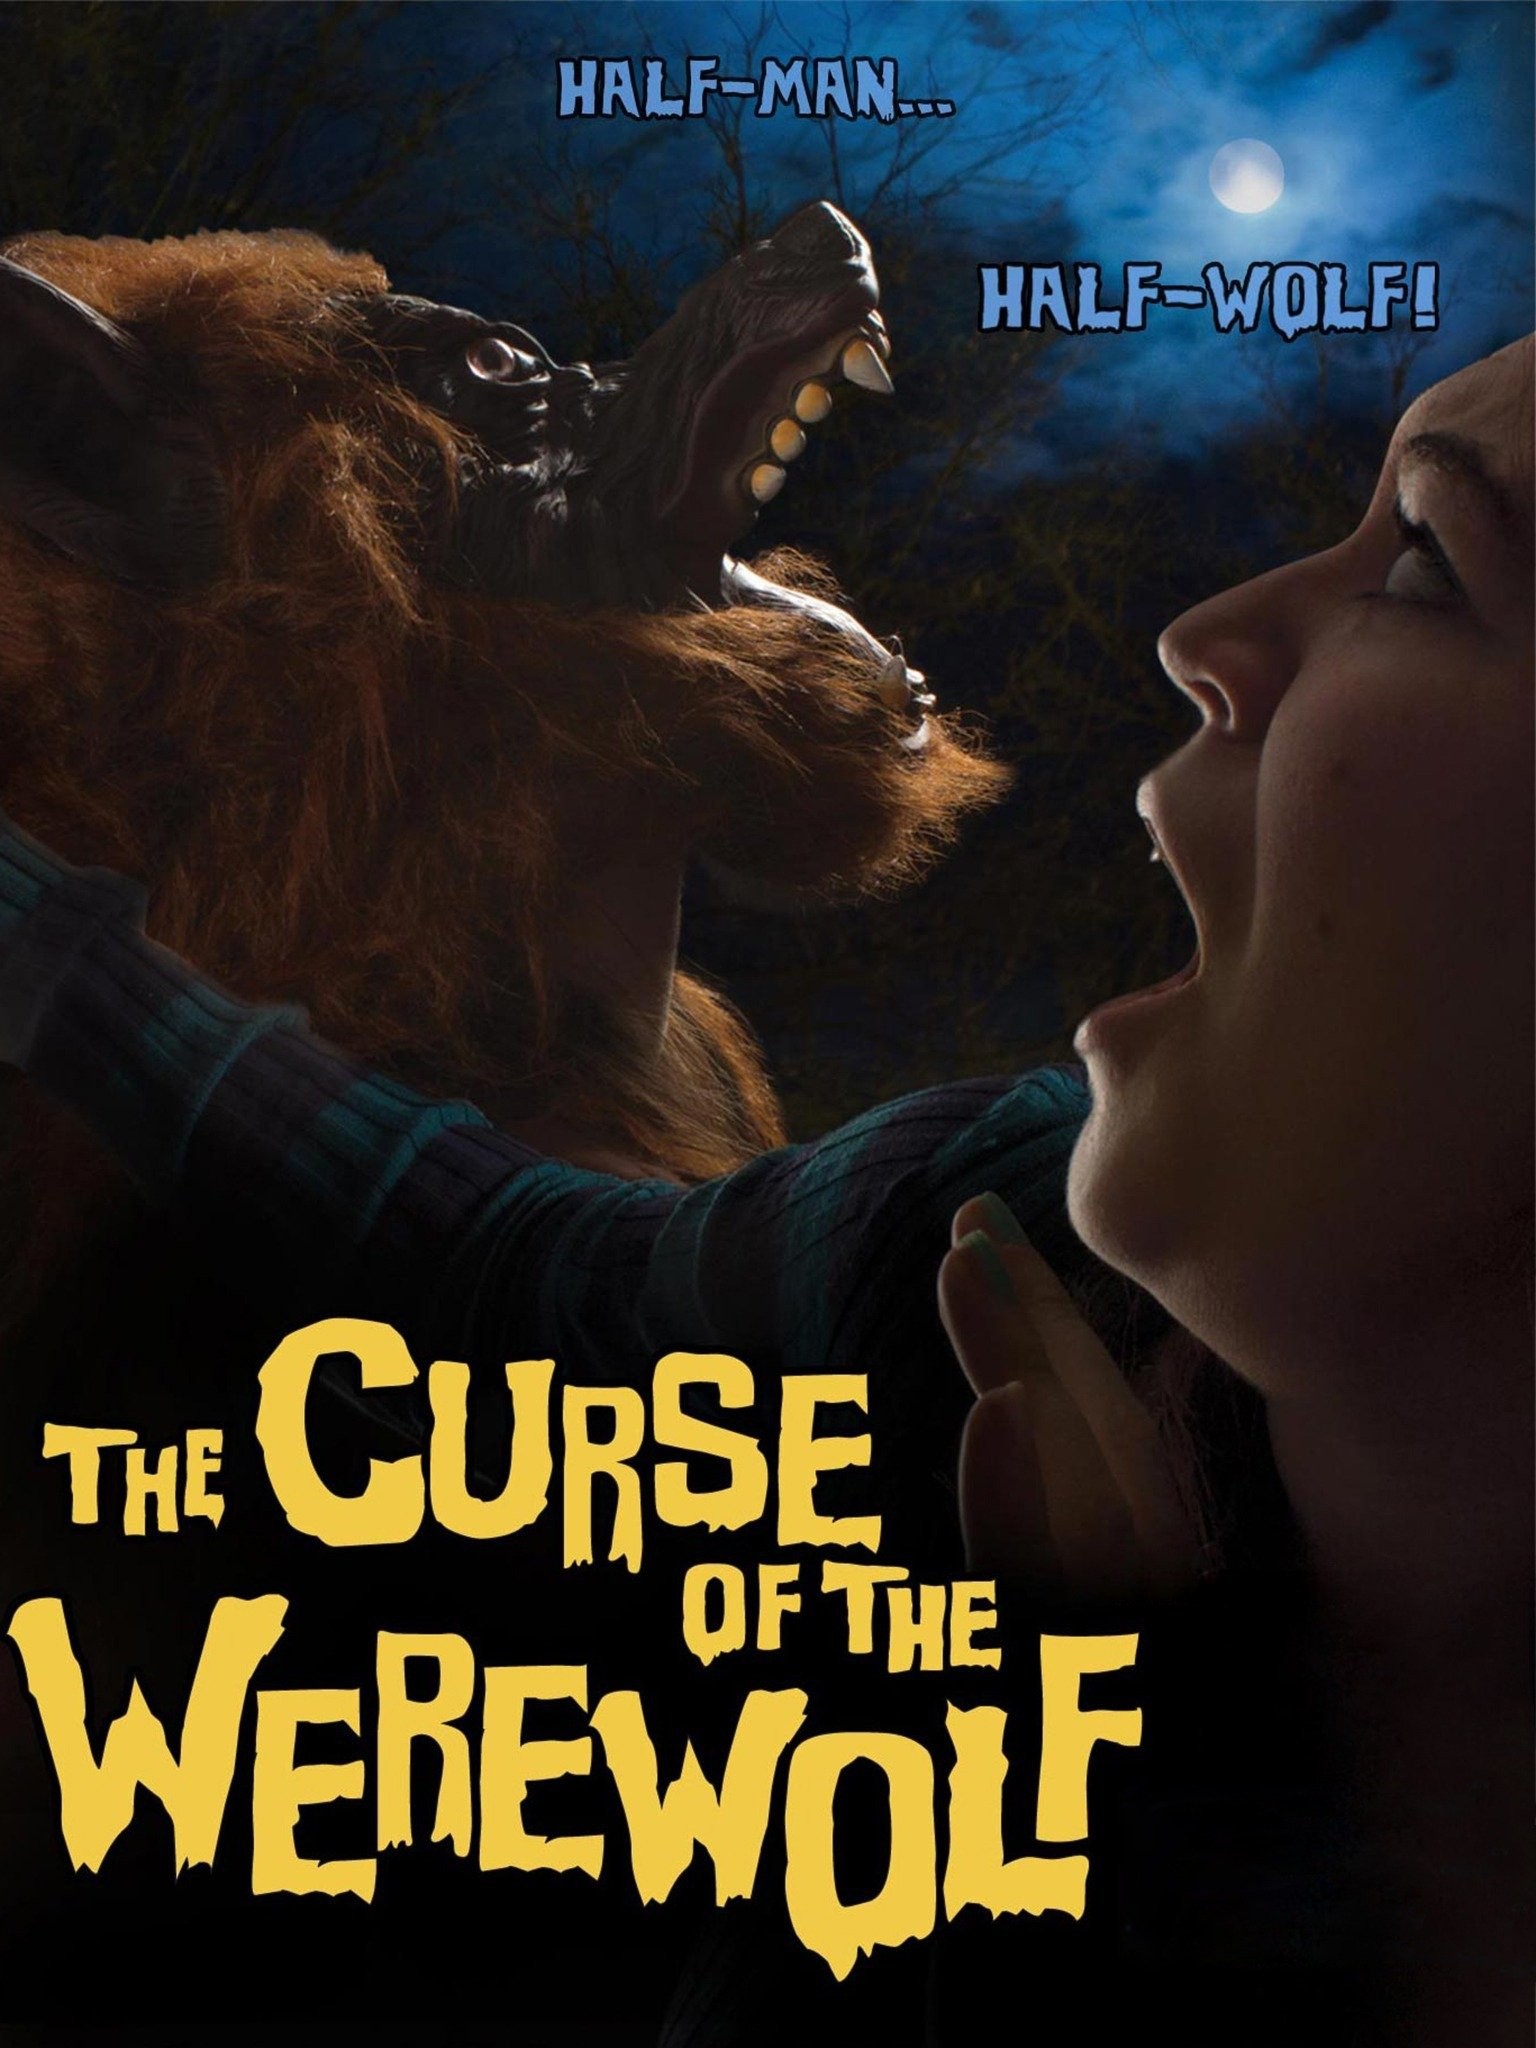 The Boy Who Cried Werewolf (2010 film) - Wikipedia